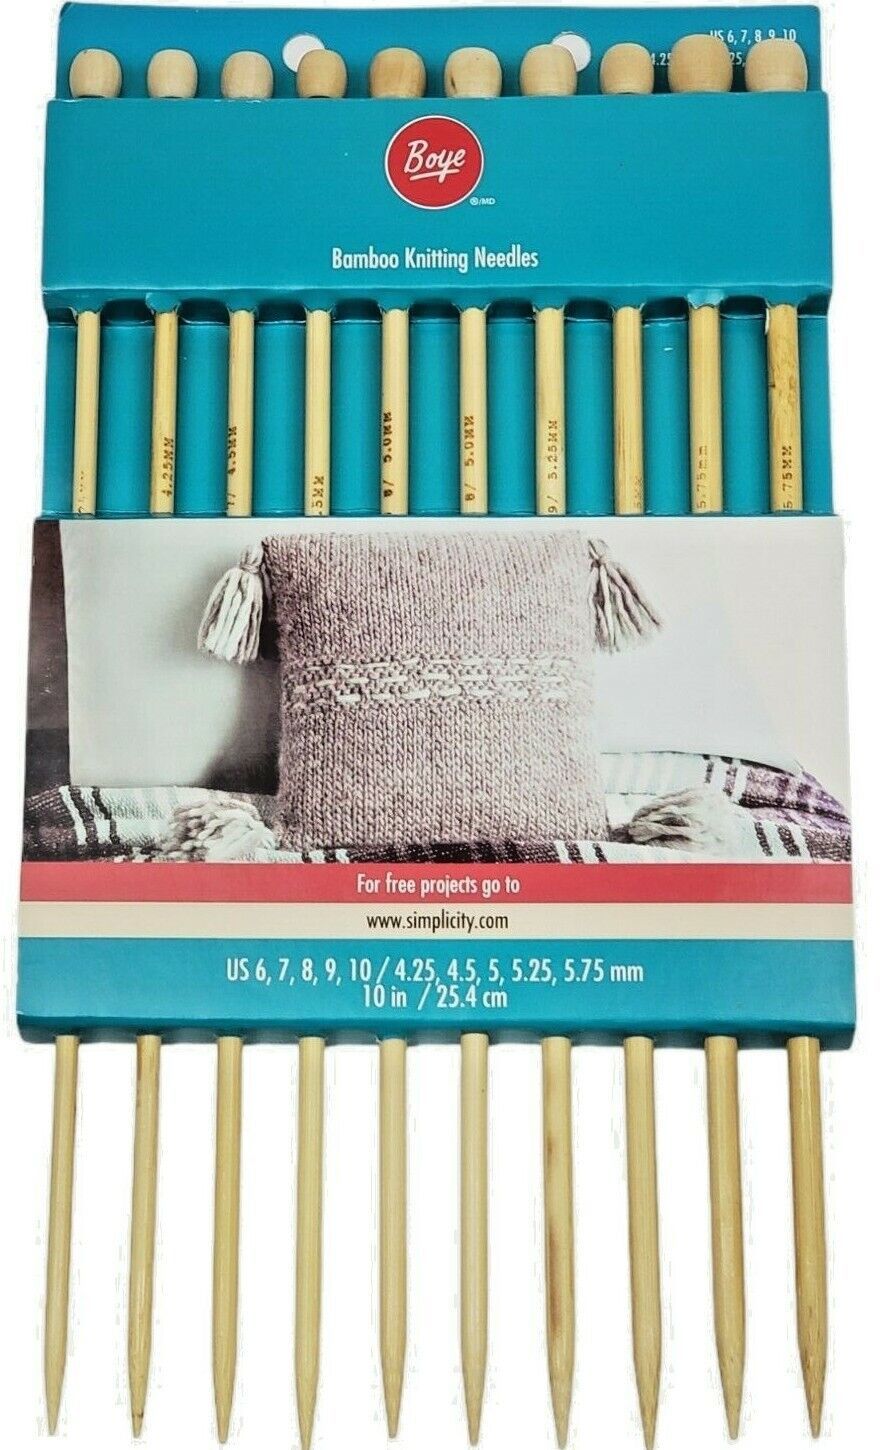 Boye Circular Aluminum Knitting Needles 29-Size 13/9mm